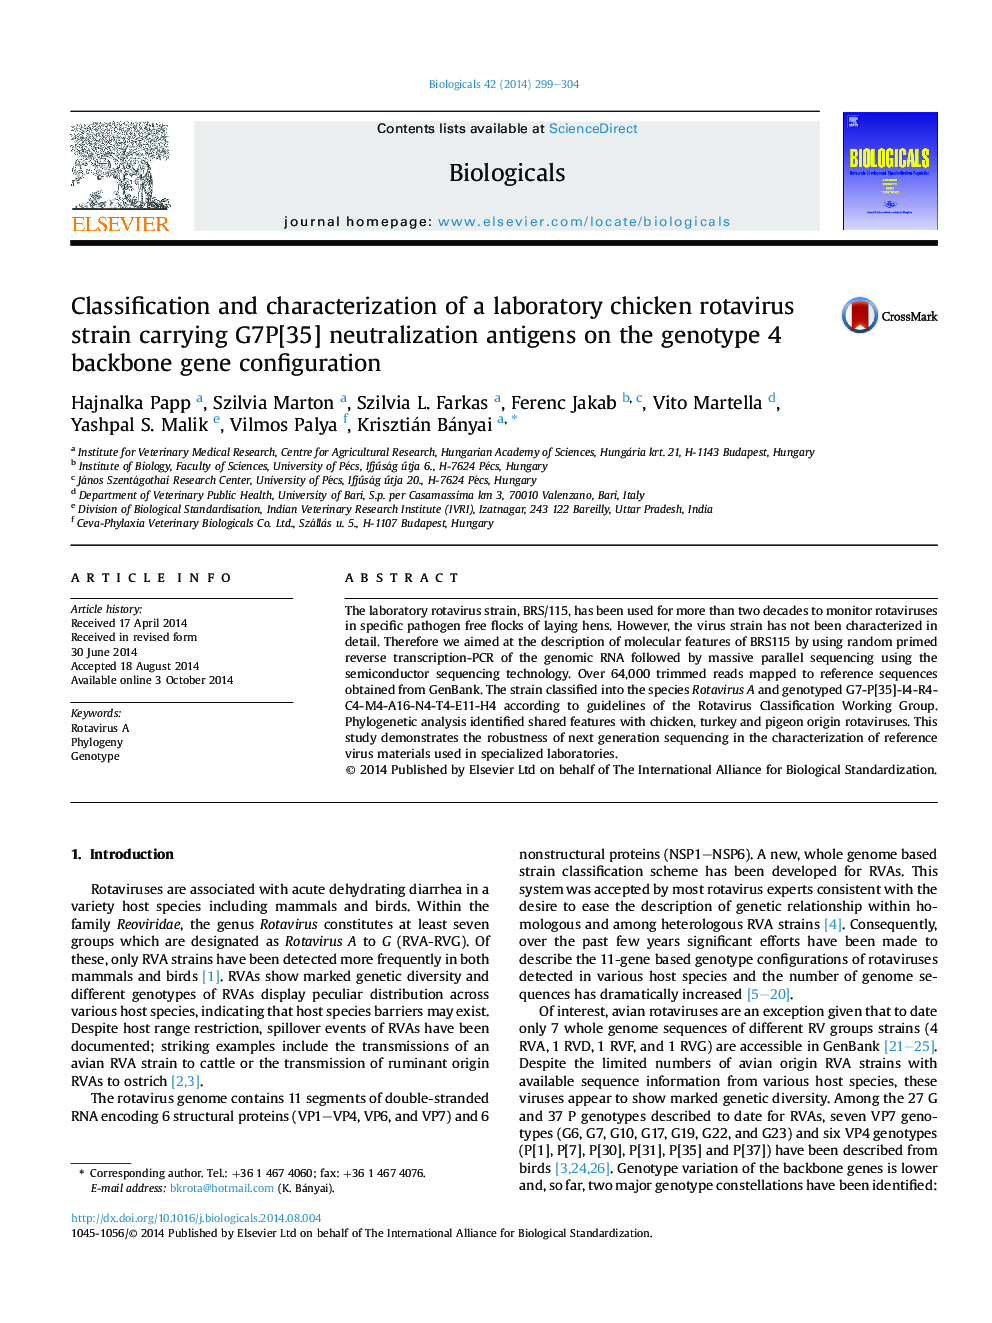 Classification and characterization of a laboratory chicken rotavirus strain carrying G7P[35] neutralization antigens on the genotype 4 backbone gene configuration